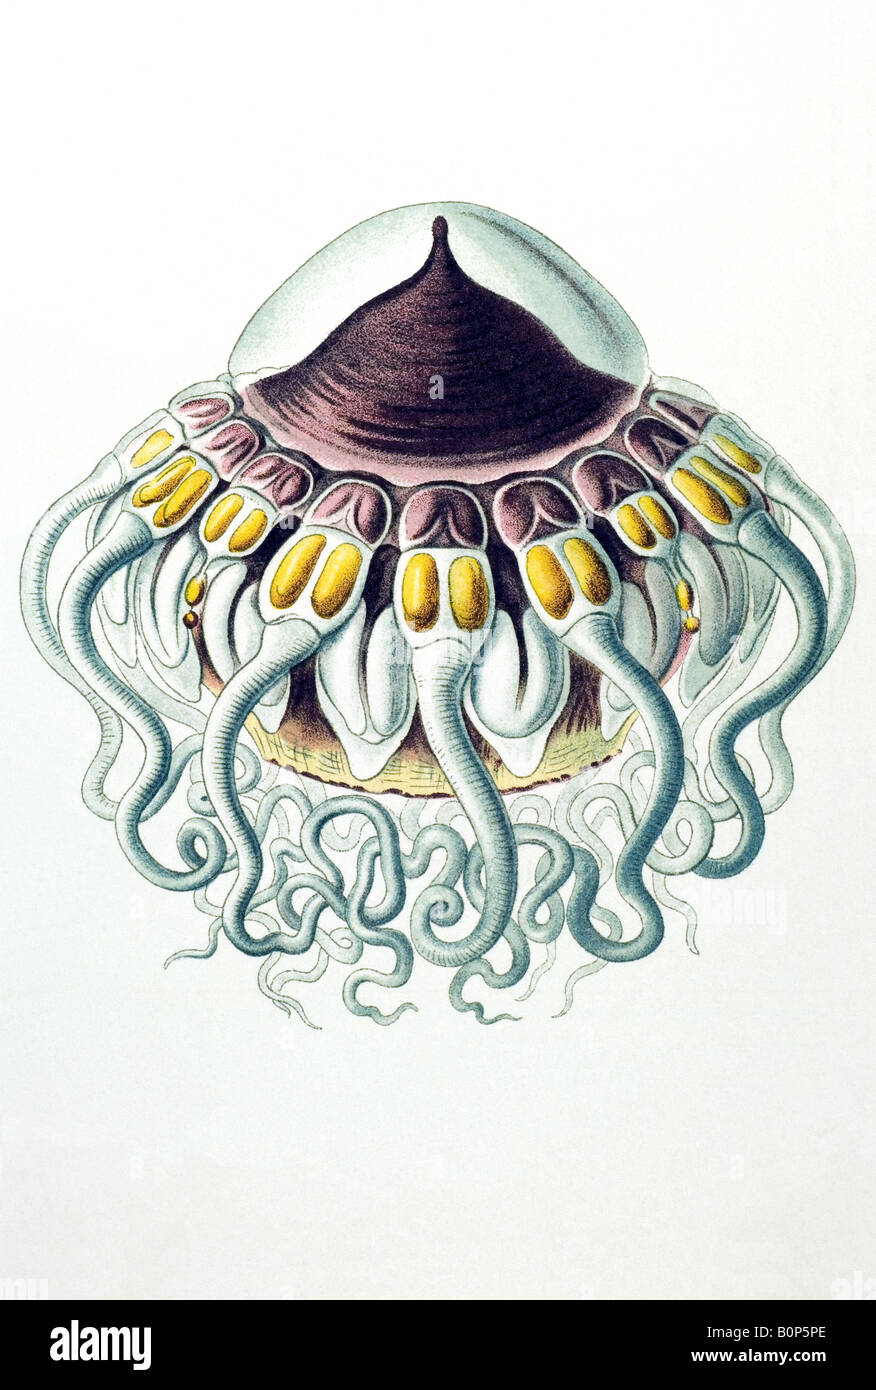 Nombre Coronatae Peromedusae, Periphylla Peronii, Haeckel, art nouveau de Europa en el siglo XX. Foto de stock